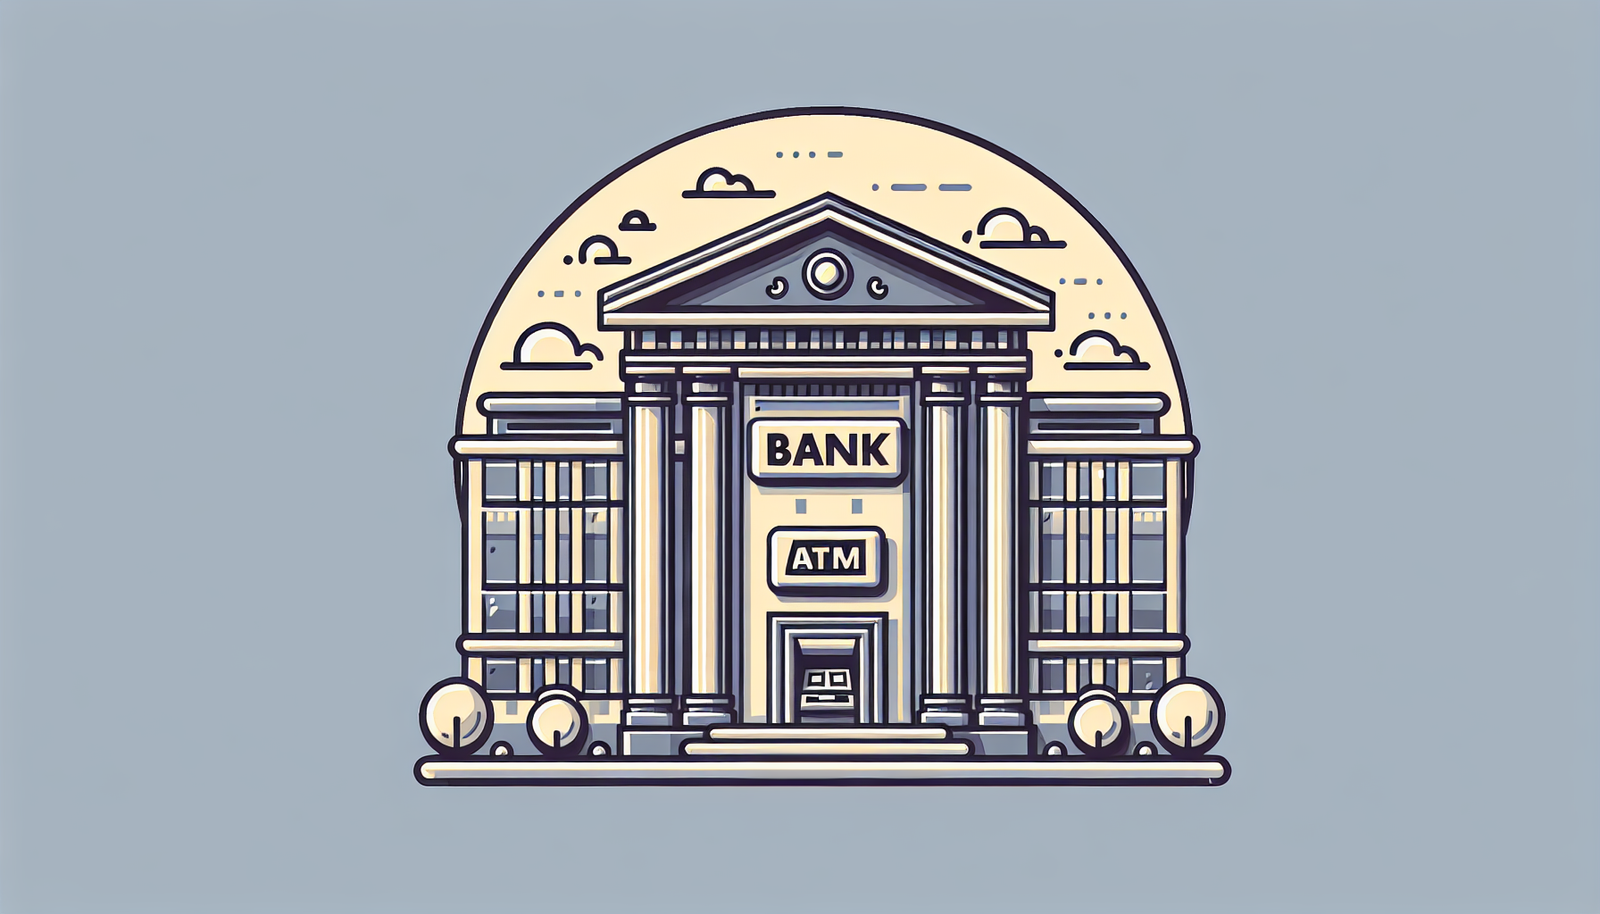 Cortrust Bank